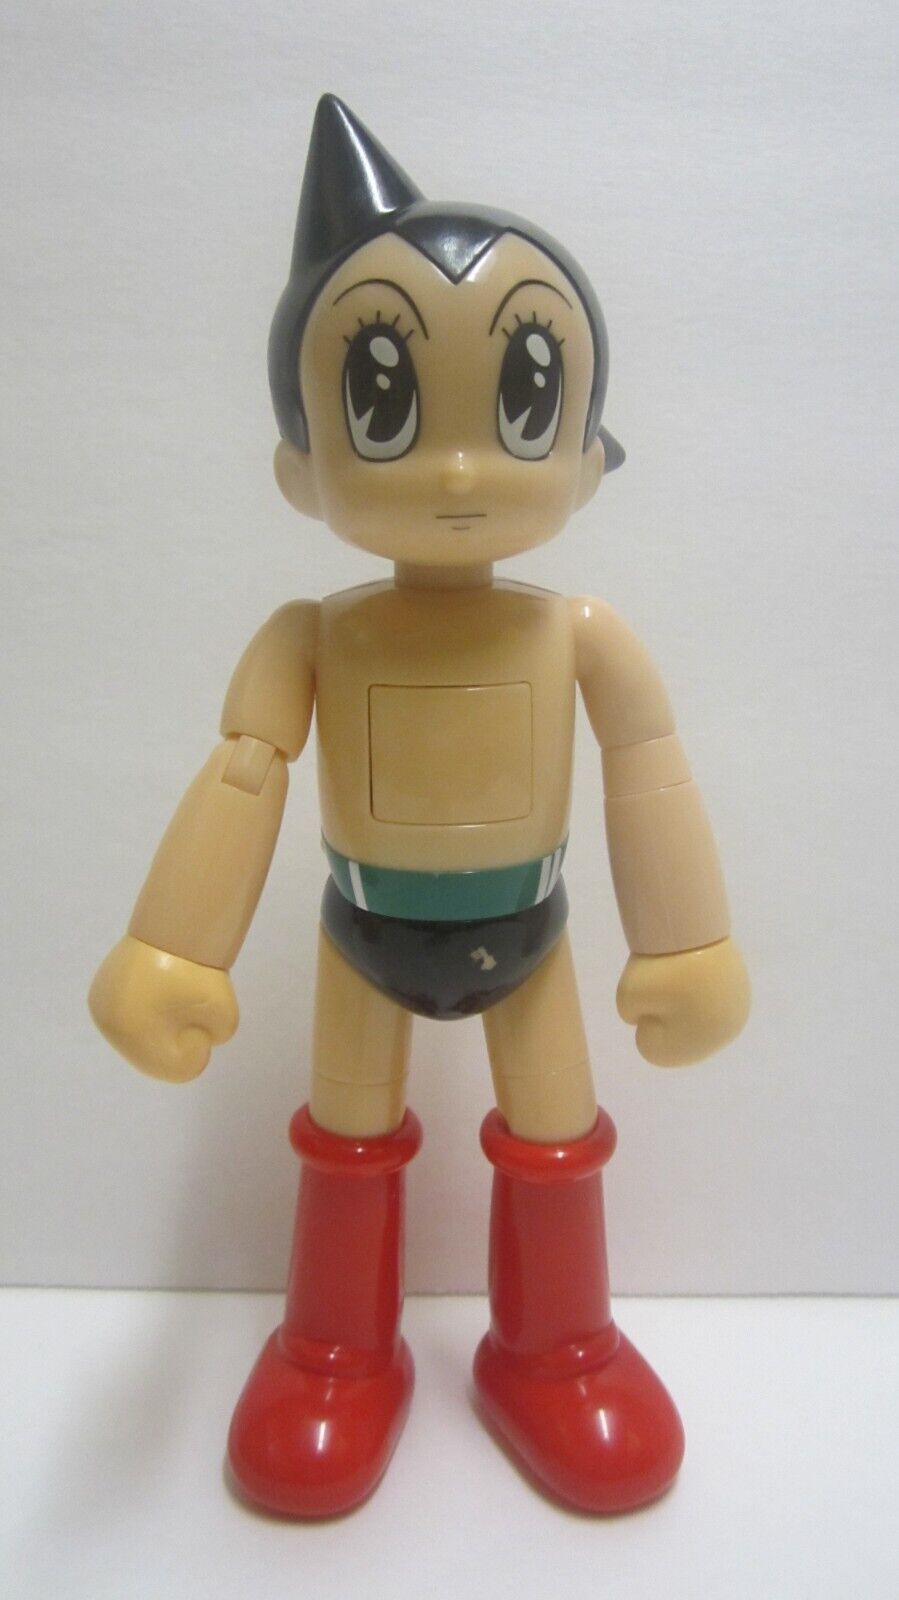 RARE Takara 2003 Astro Boy Toy Figure with Sound Effects